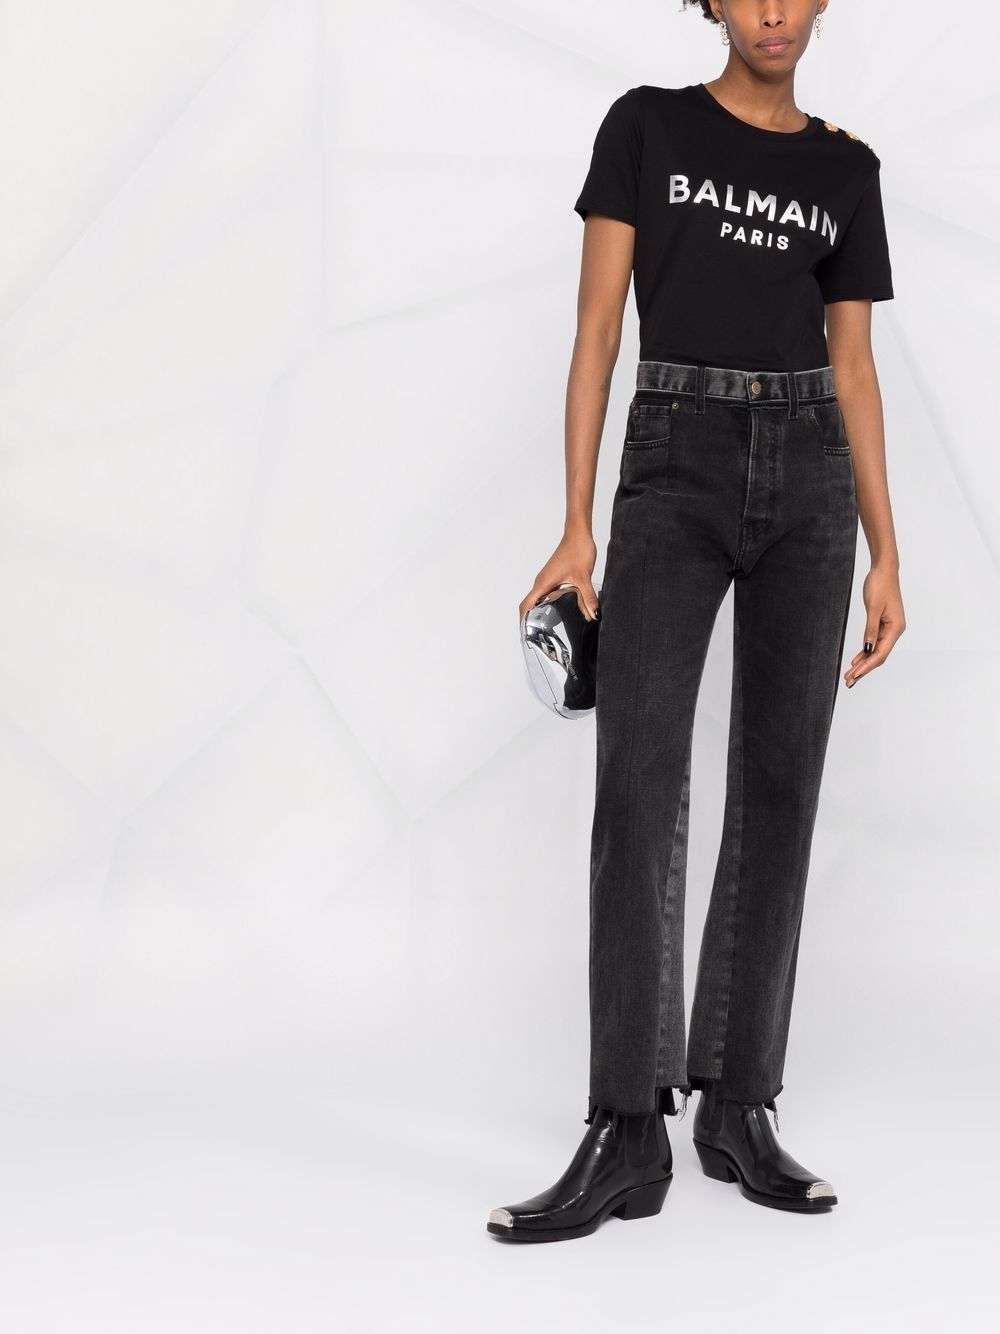 Image 2 of Balmain logo-print T-shirt